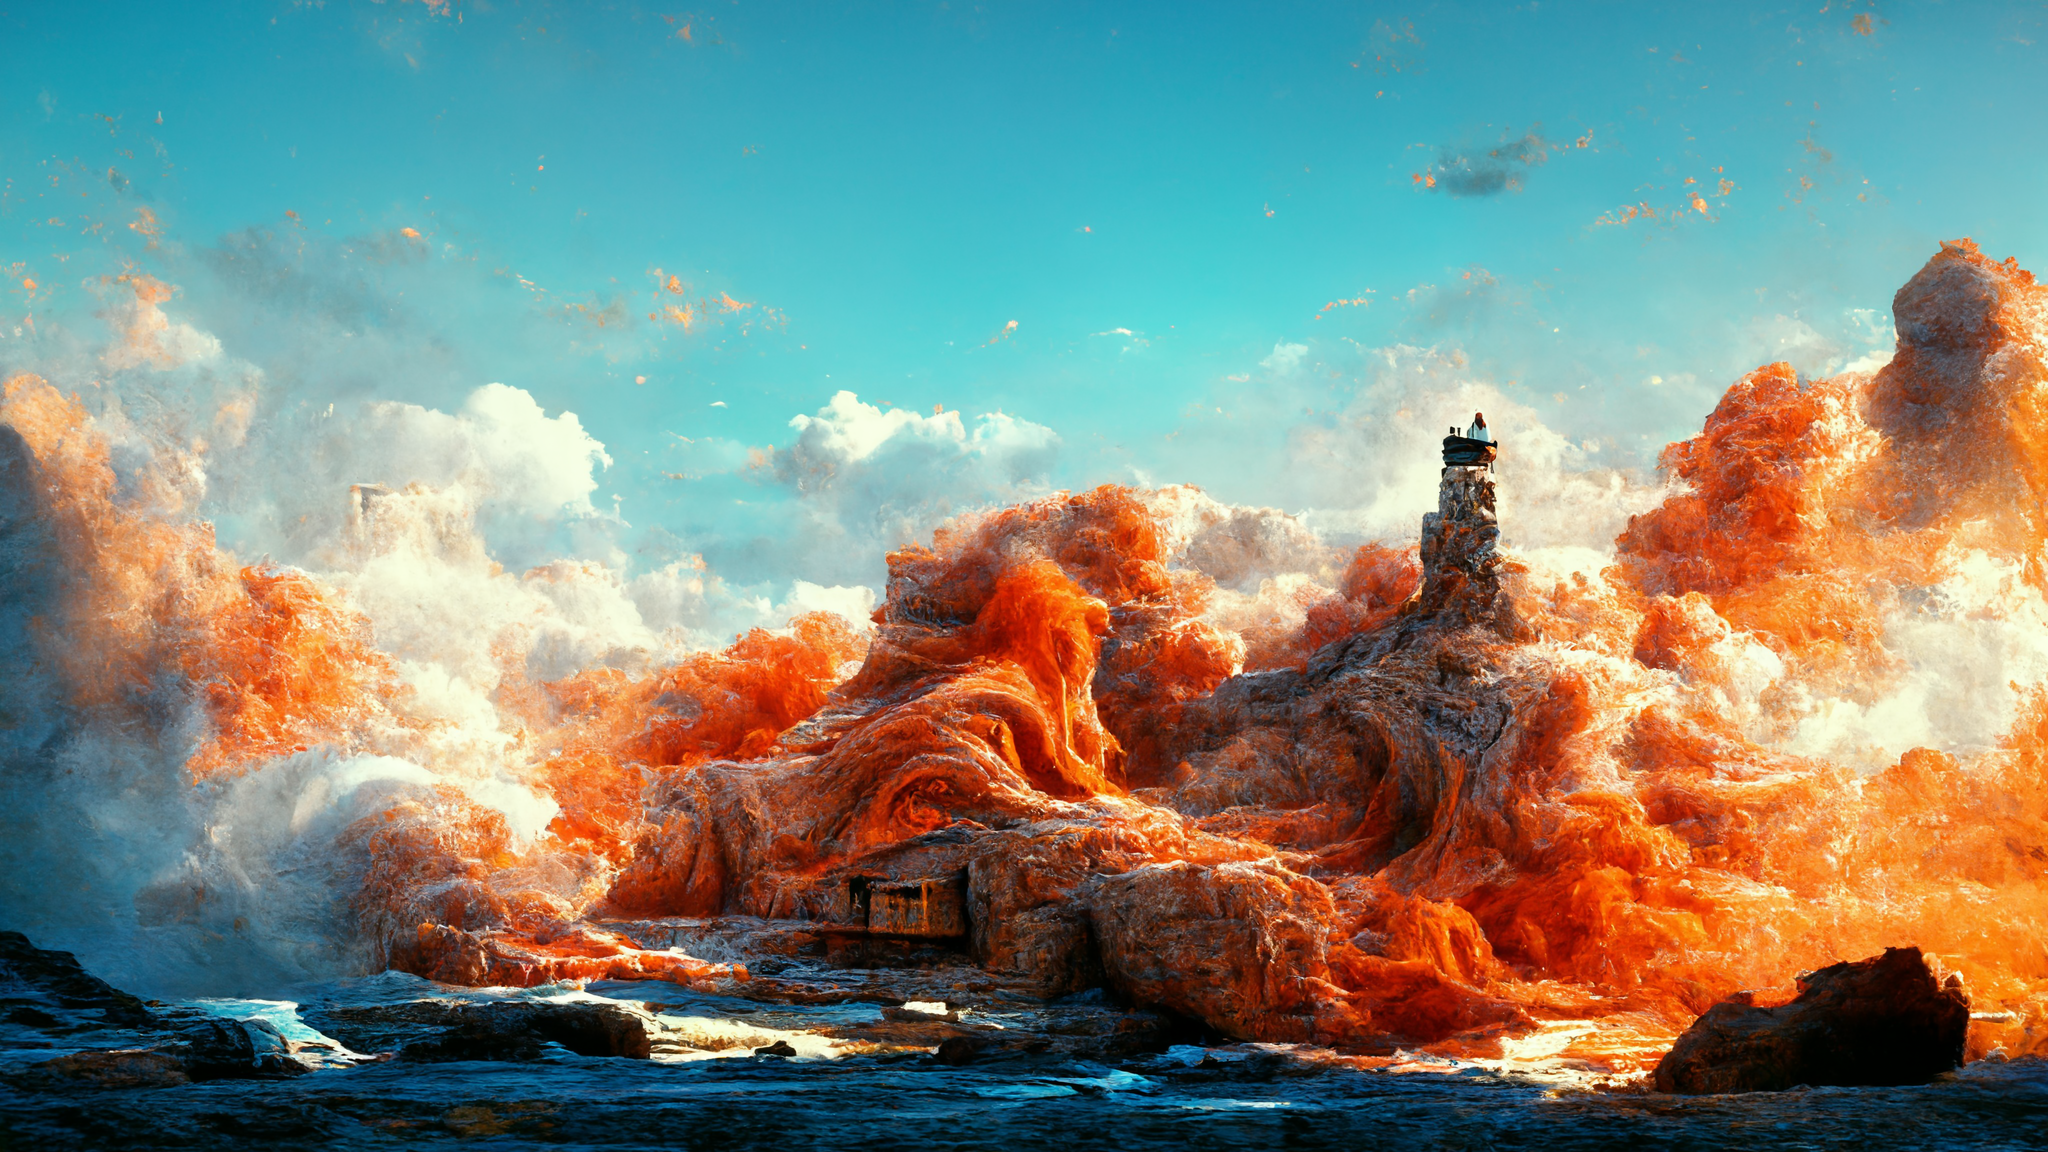 General 2048x1152 house cliff storm orange fire ocean view AI art